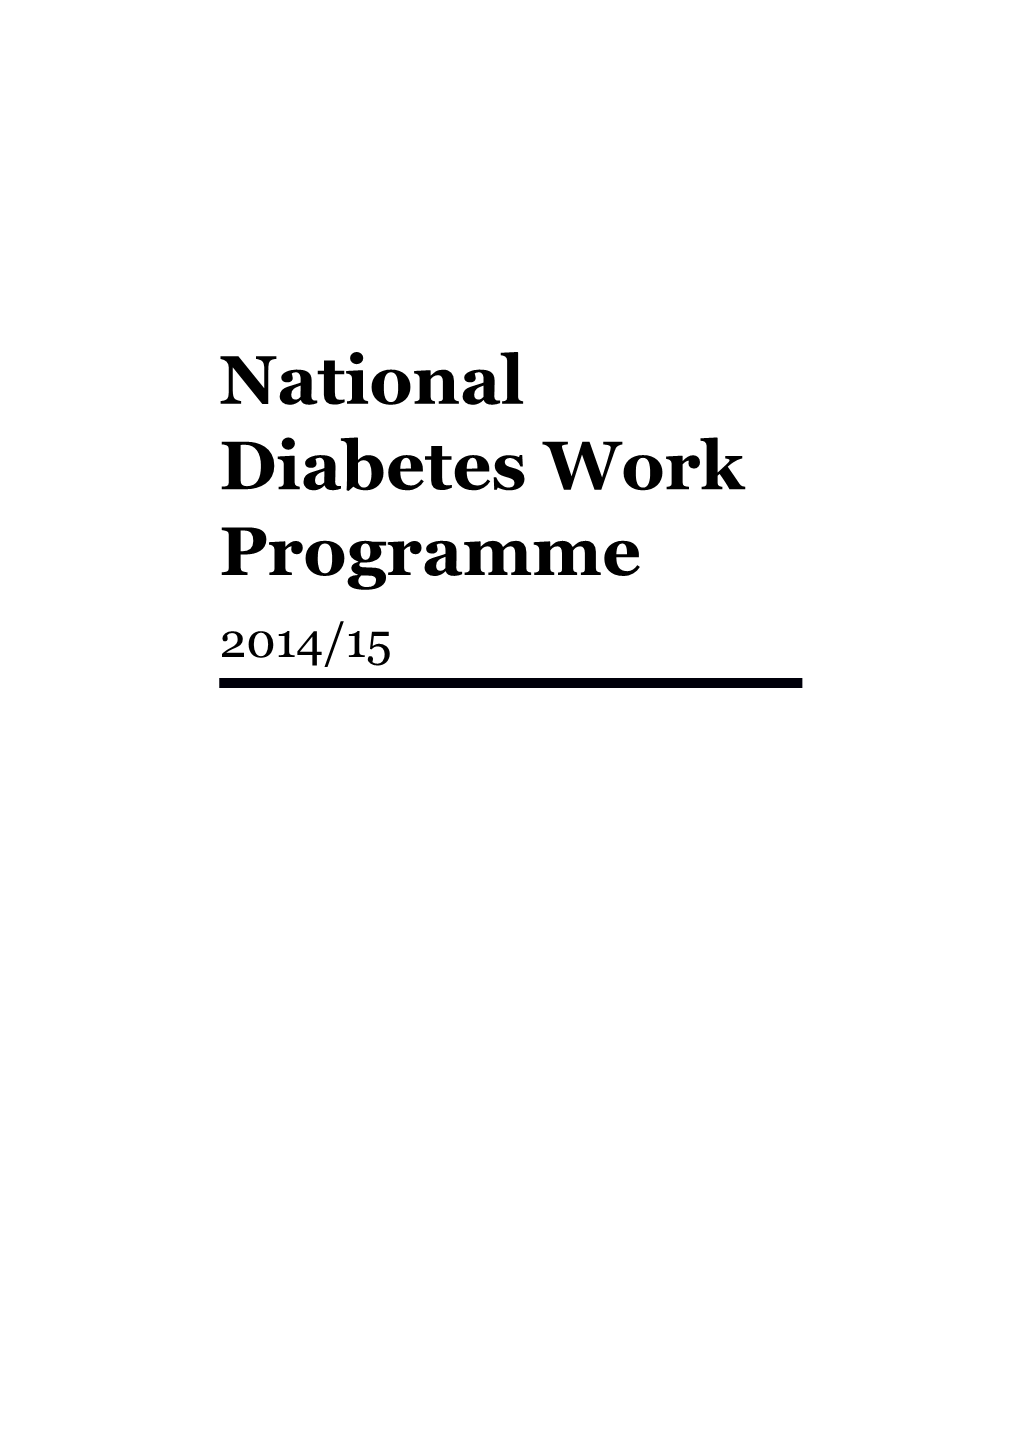 National Diabetes Work Programme